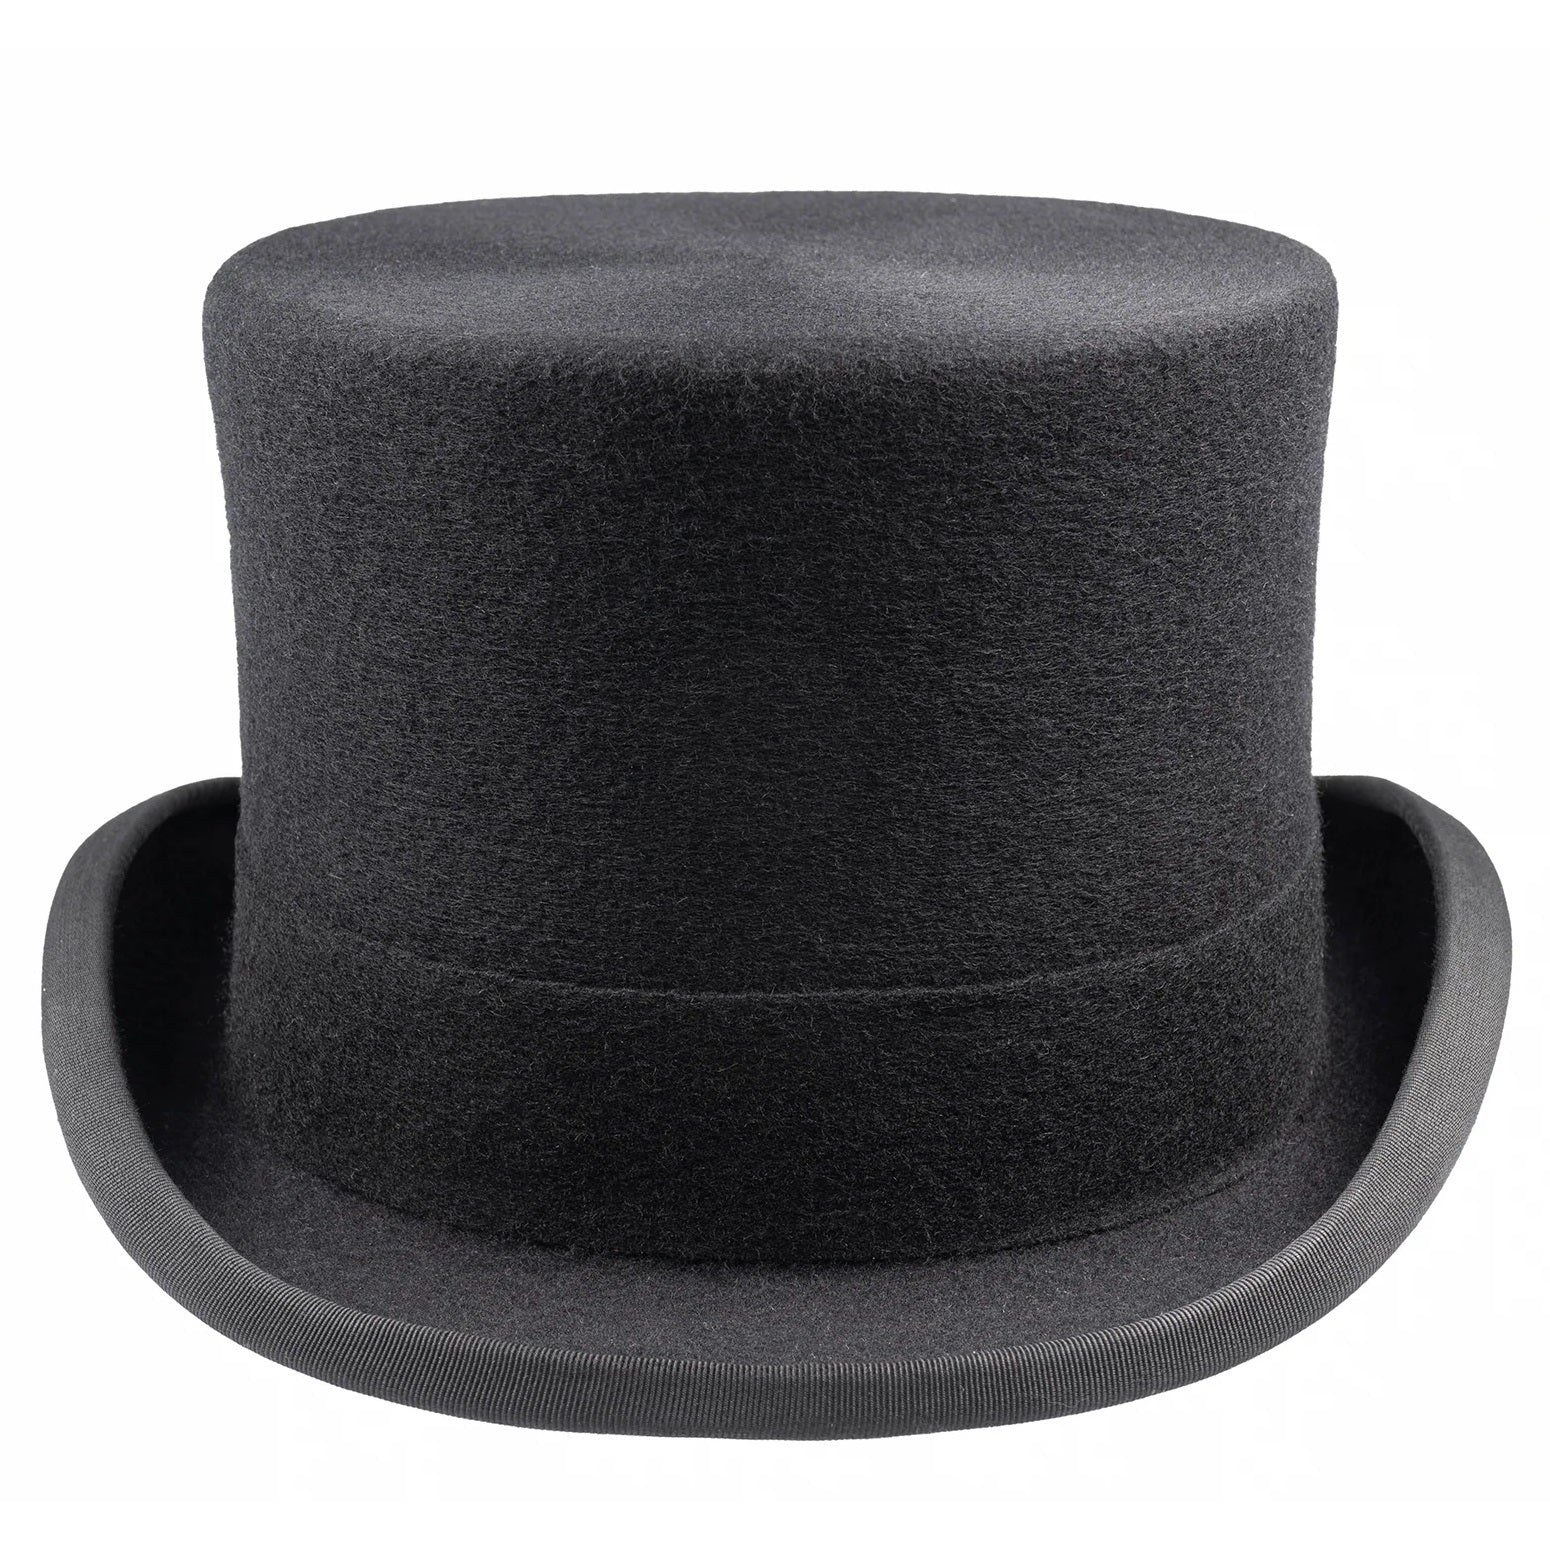 CHRISTYS' Wool Felt Top Hat - Black